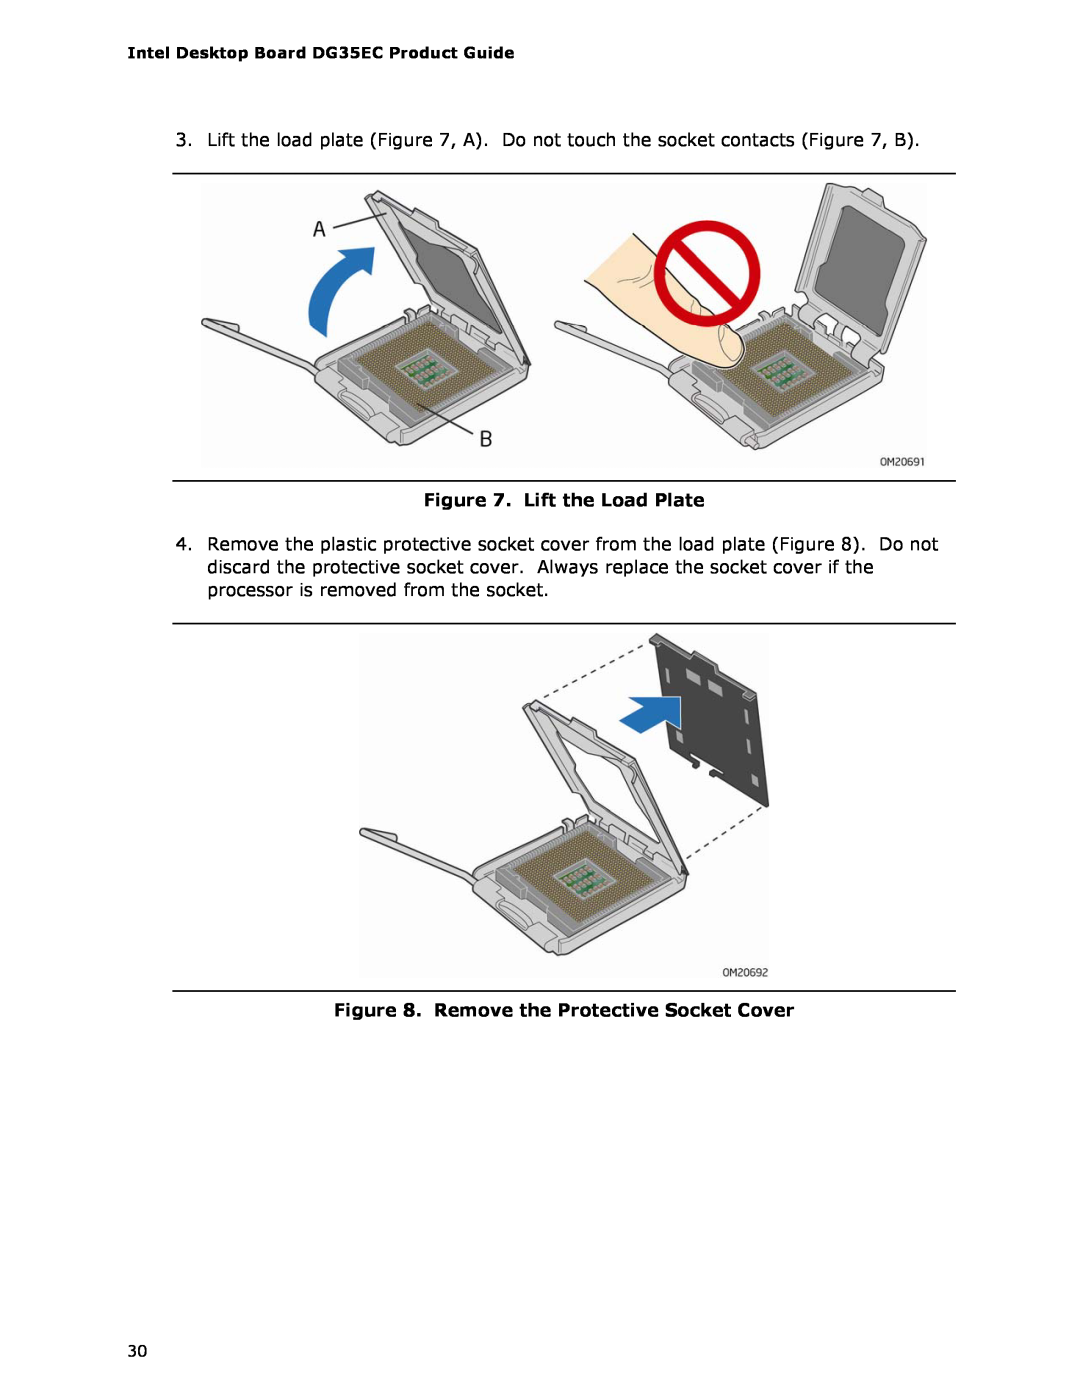 Intel Intel Desktop Board, DG35EC manual Lift the Load Plate, Remove the Protective Socket Cover 